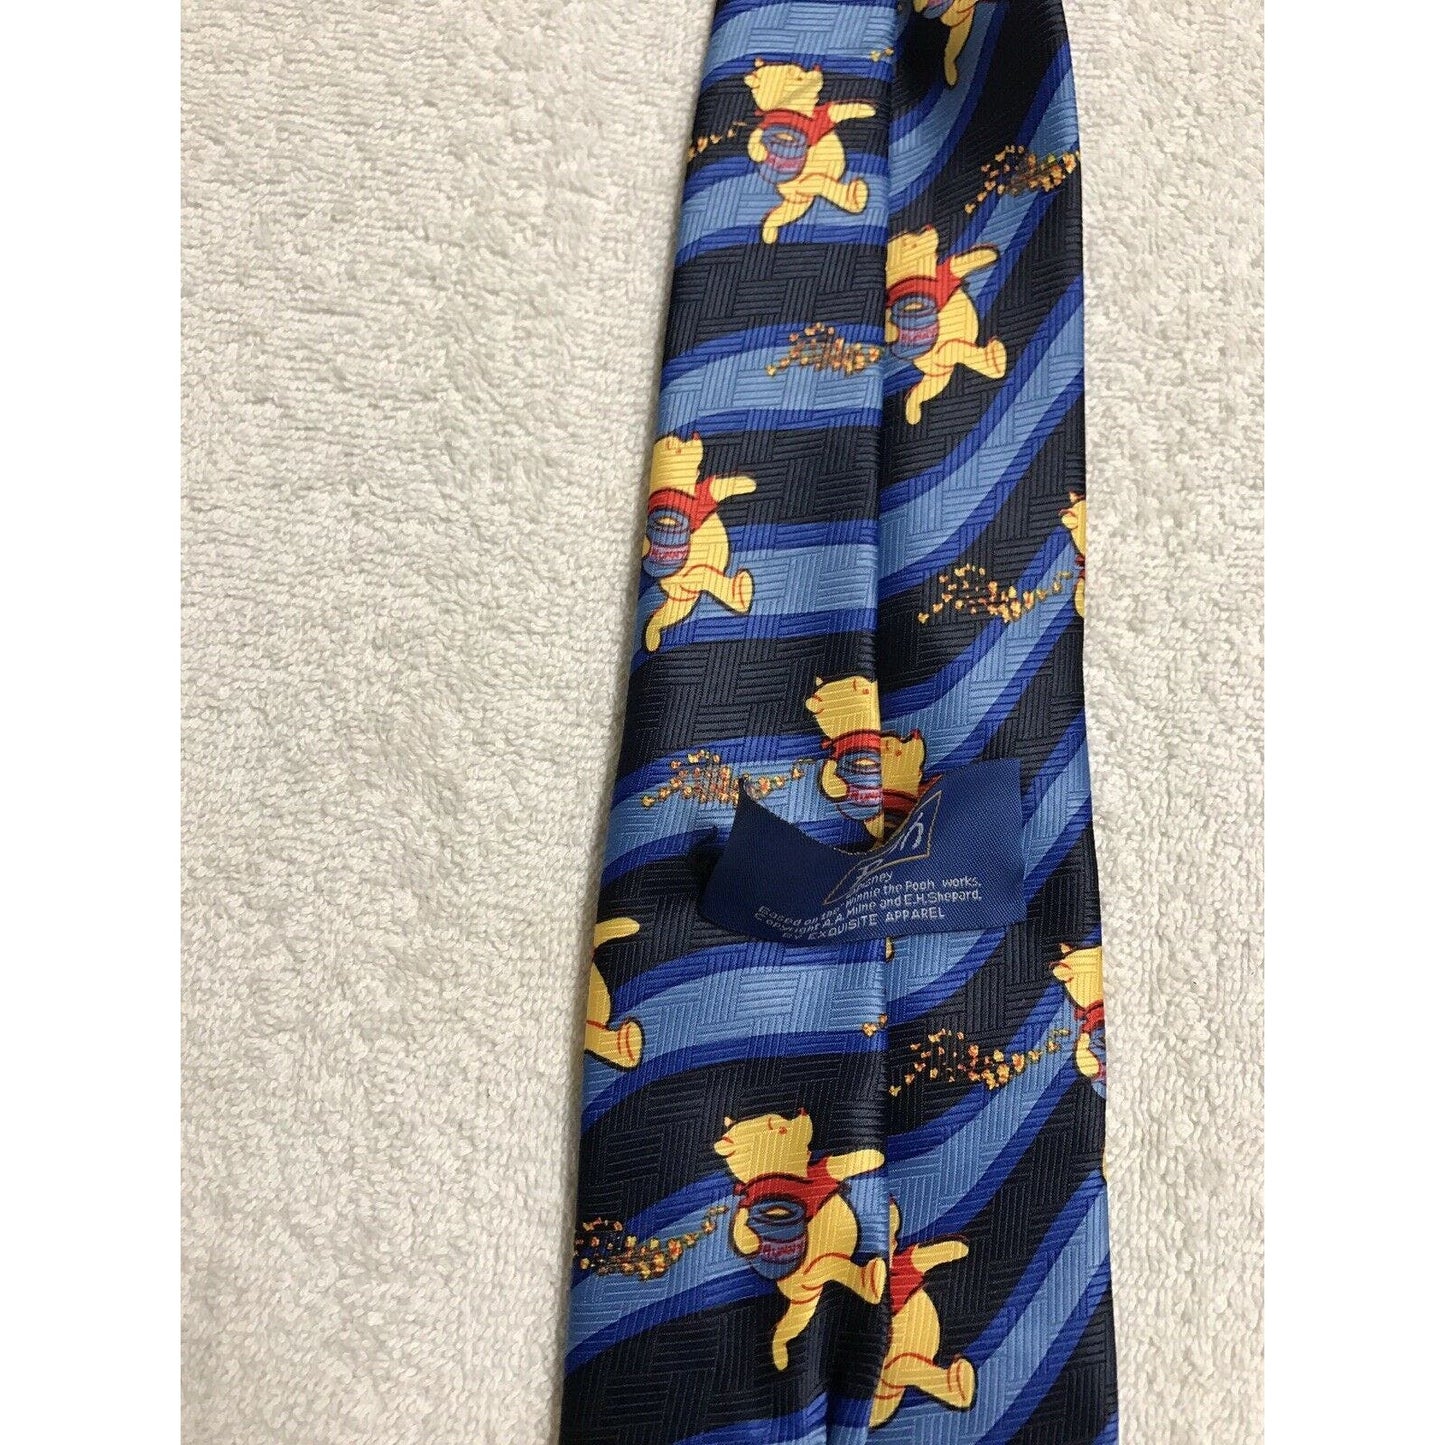 Disney Winnie The Pooh Cartoon Bees Hunny Pot Blue Cartoon Novelty Tie Necktie